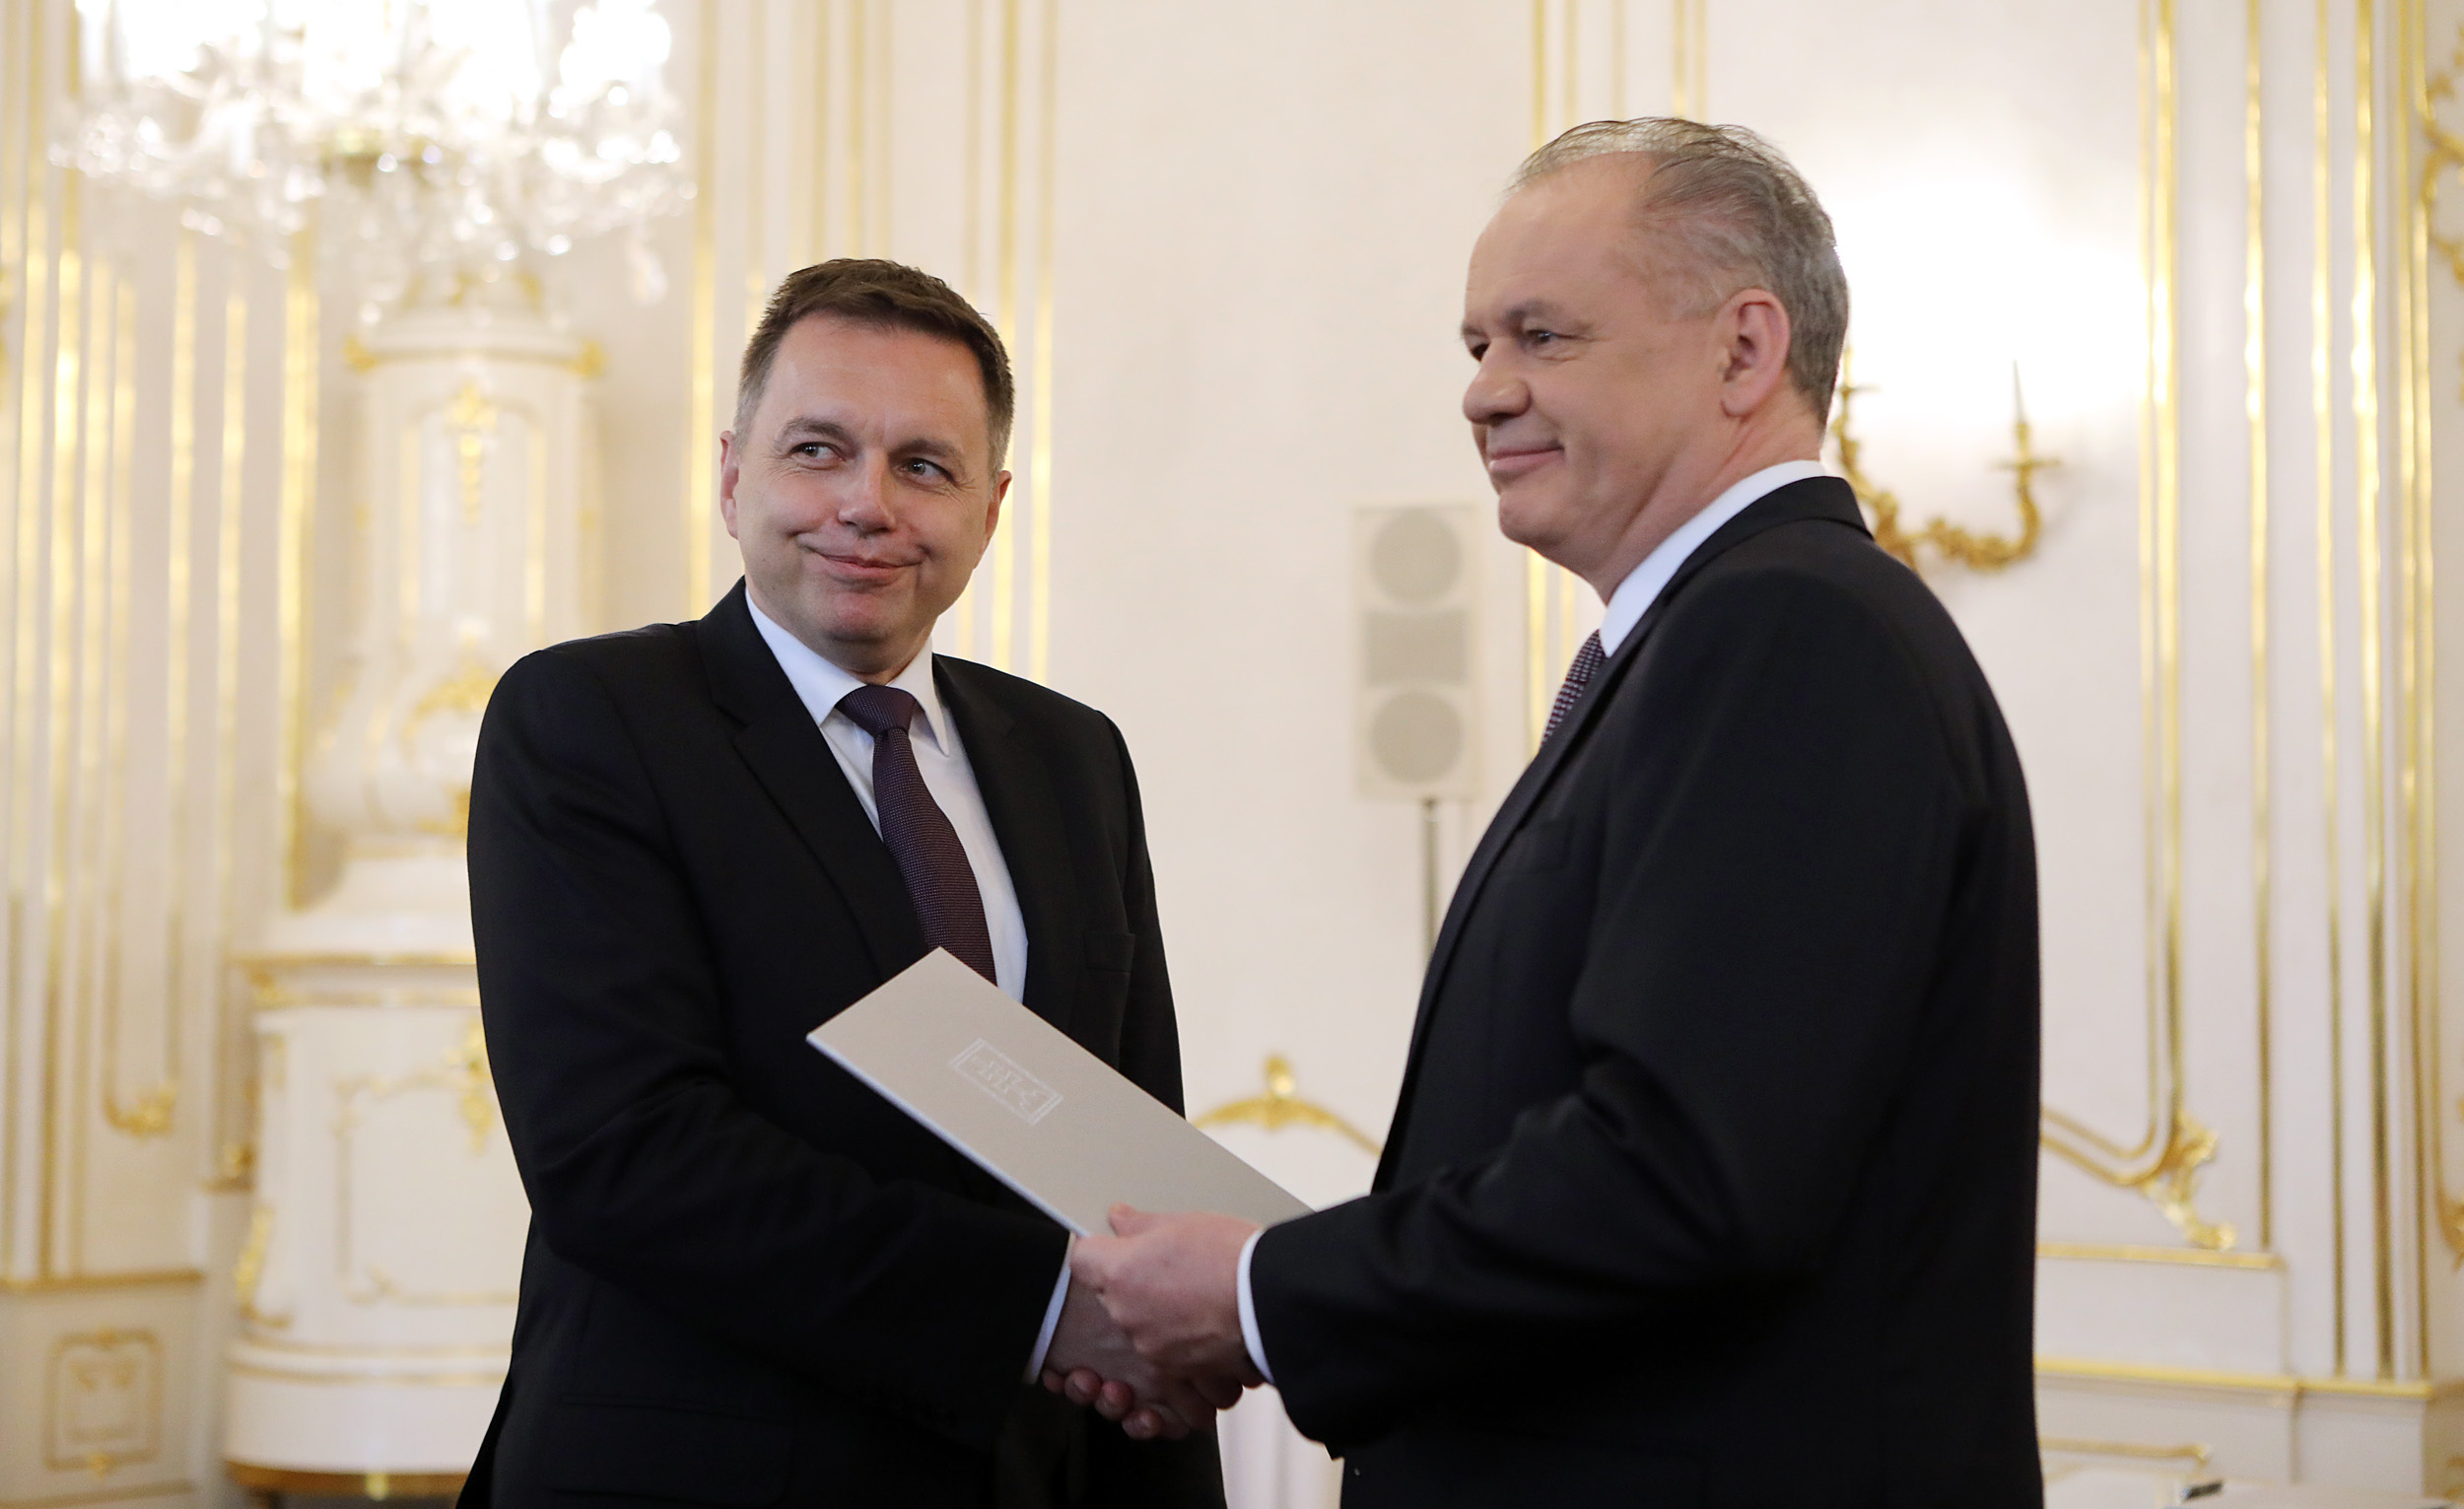 Slovak President appoints Peter Kažimír as NBS Governor